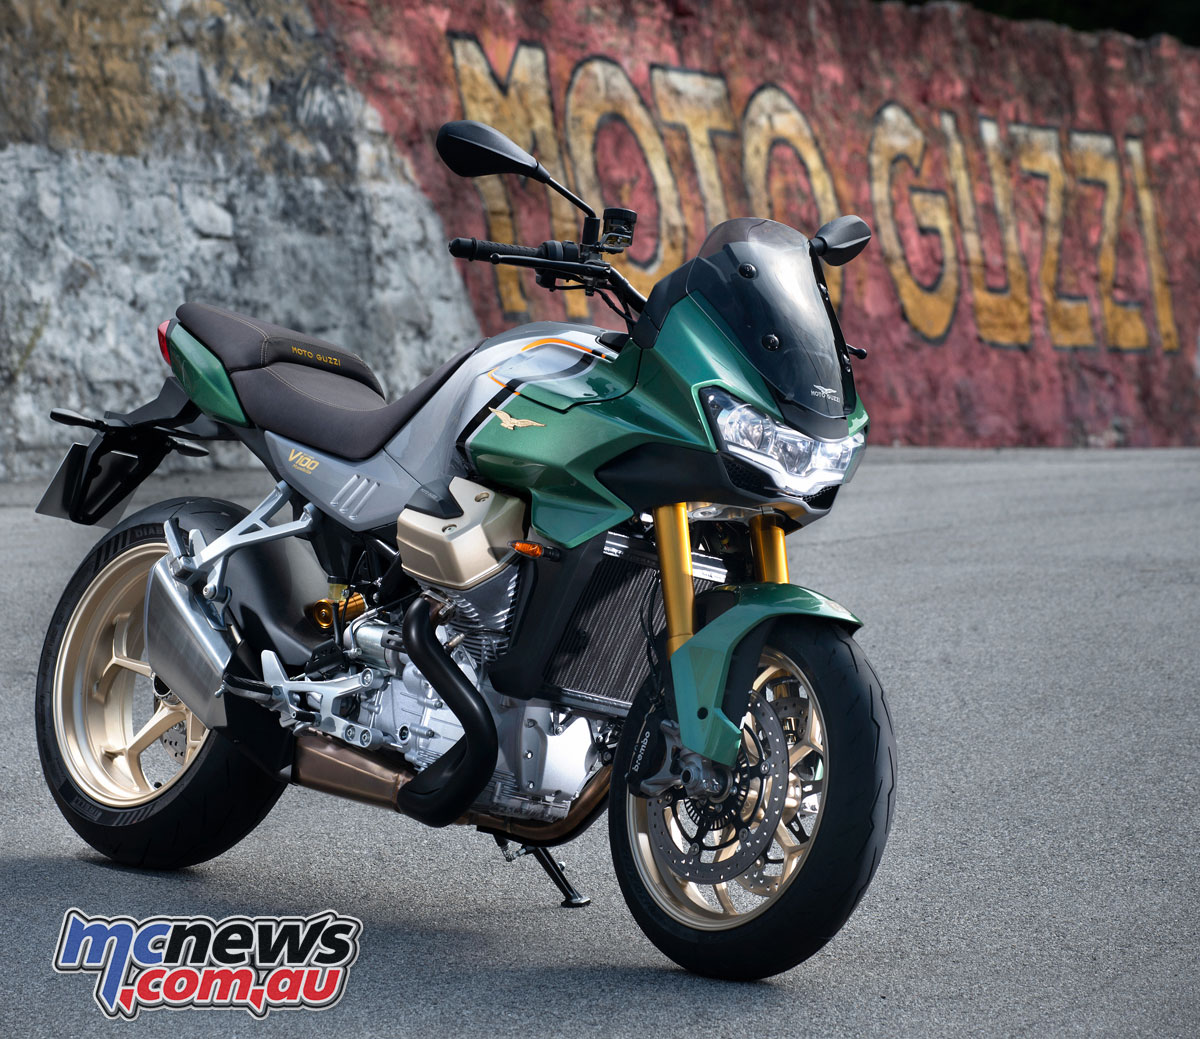 Moto Guzzi V100 Mandello peek suggests new direction | MCNews